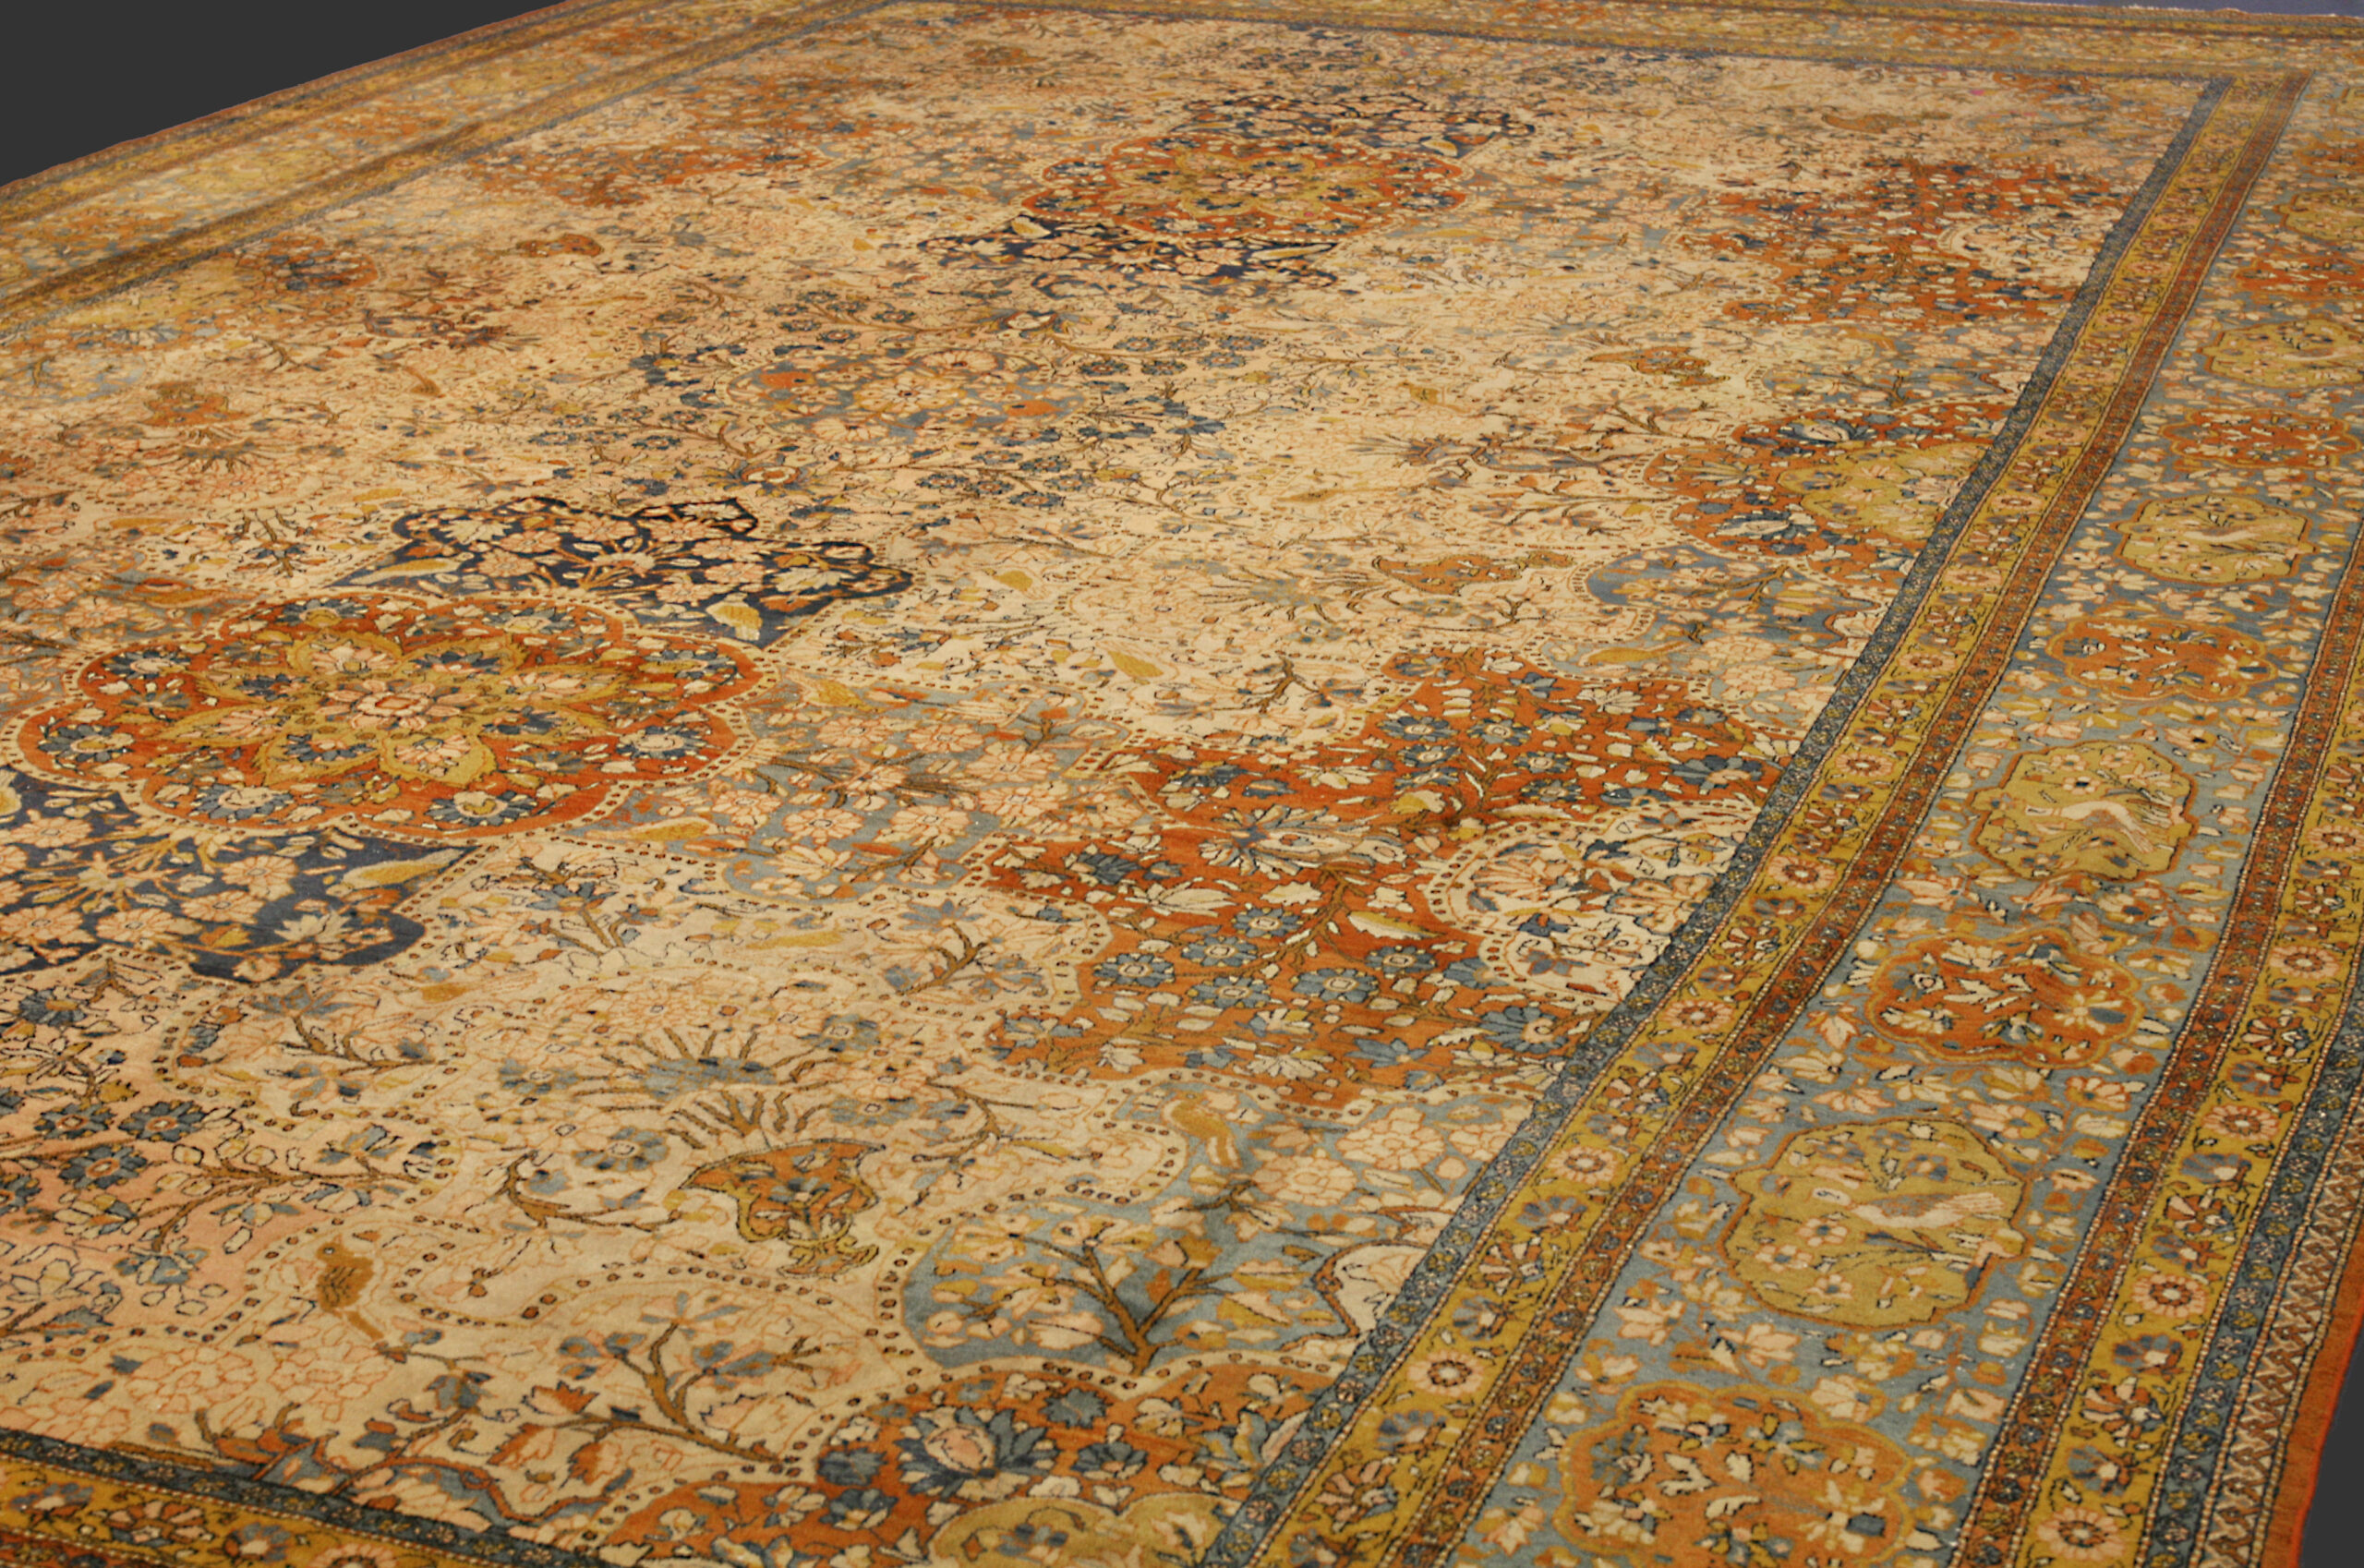 Antique Persian Kashan Dabir All-Over Carpet n°:77879683